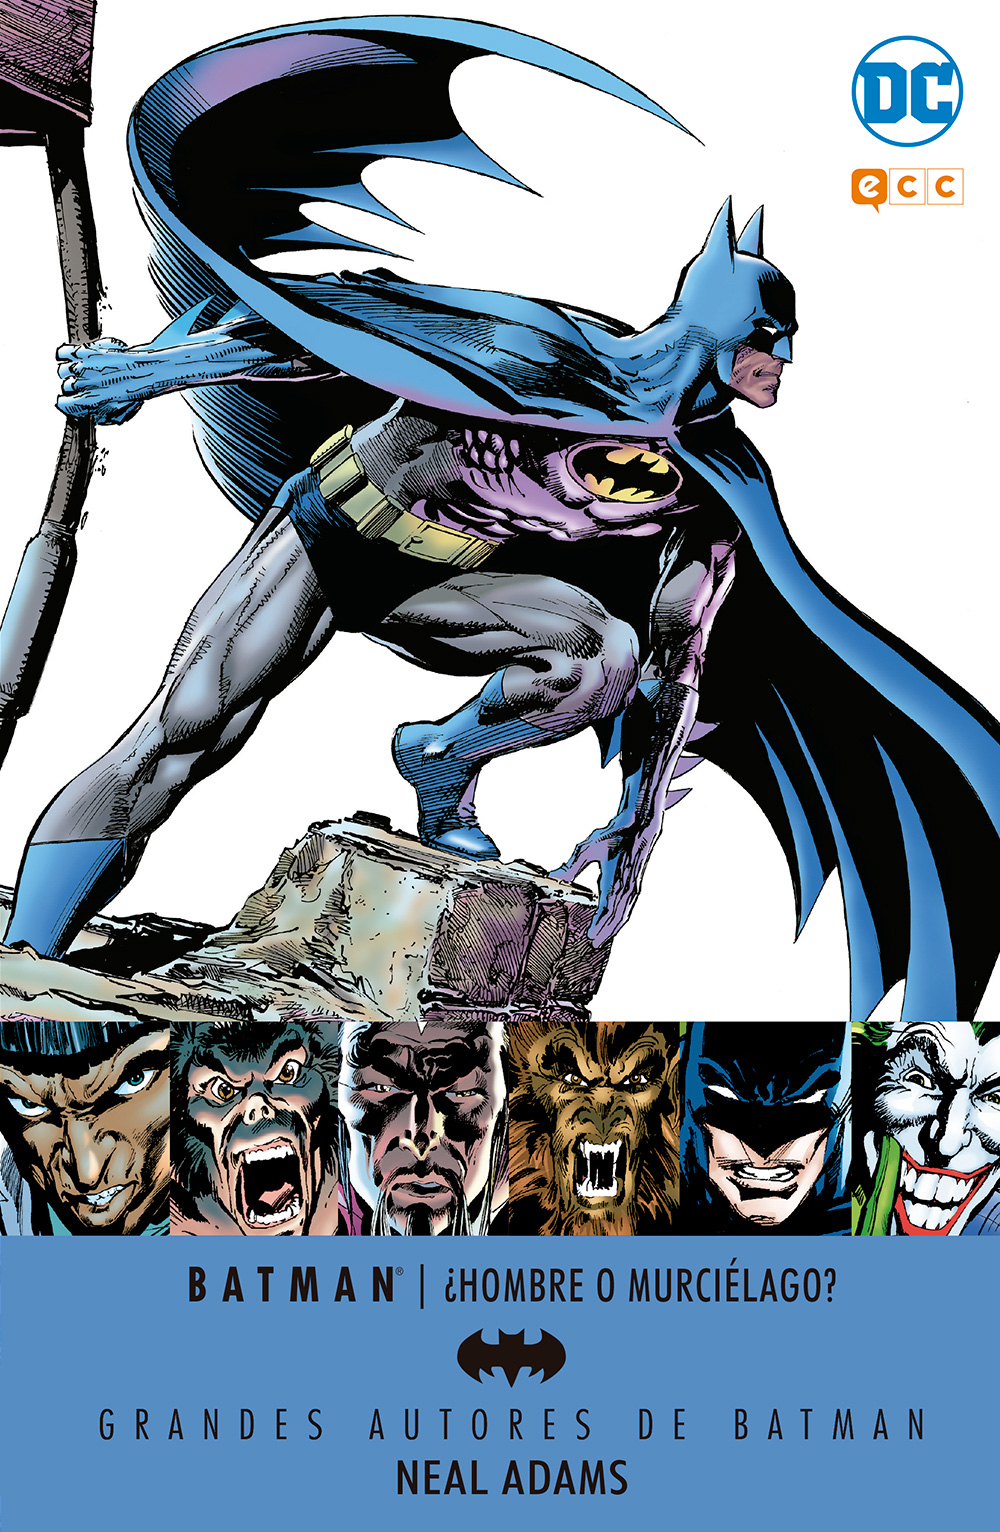 Grandes autores de Batman: Neal Adams - ¿Hombre o murciélago? - Abacus  Online